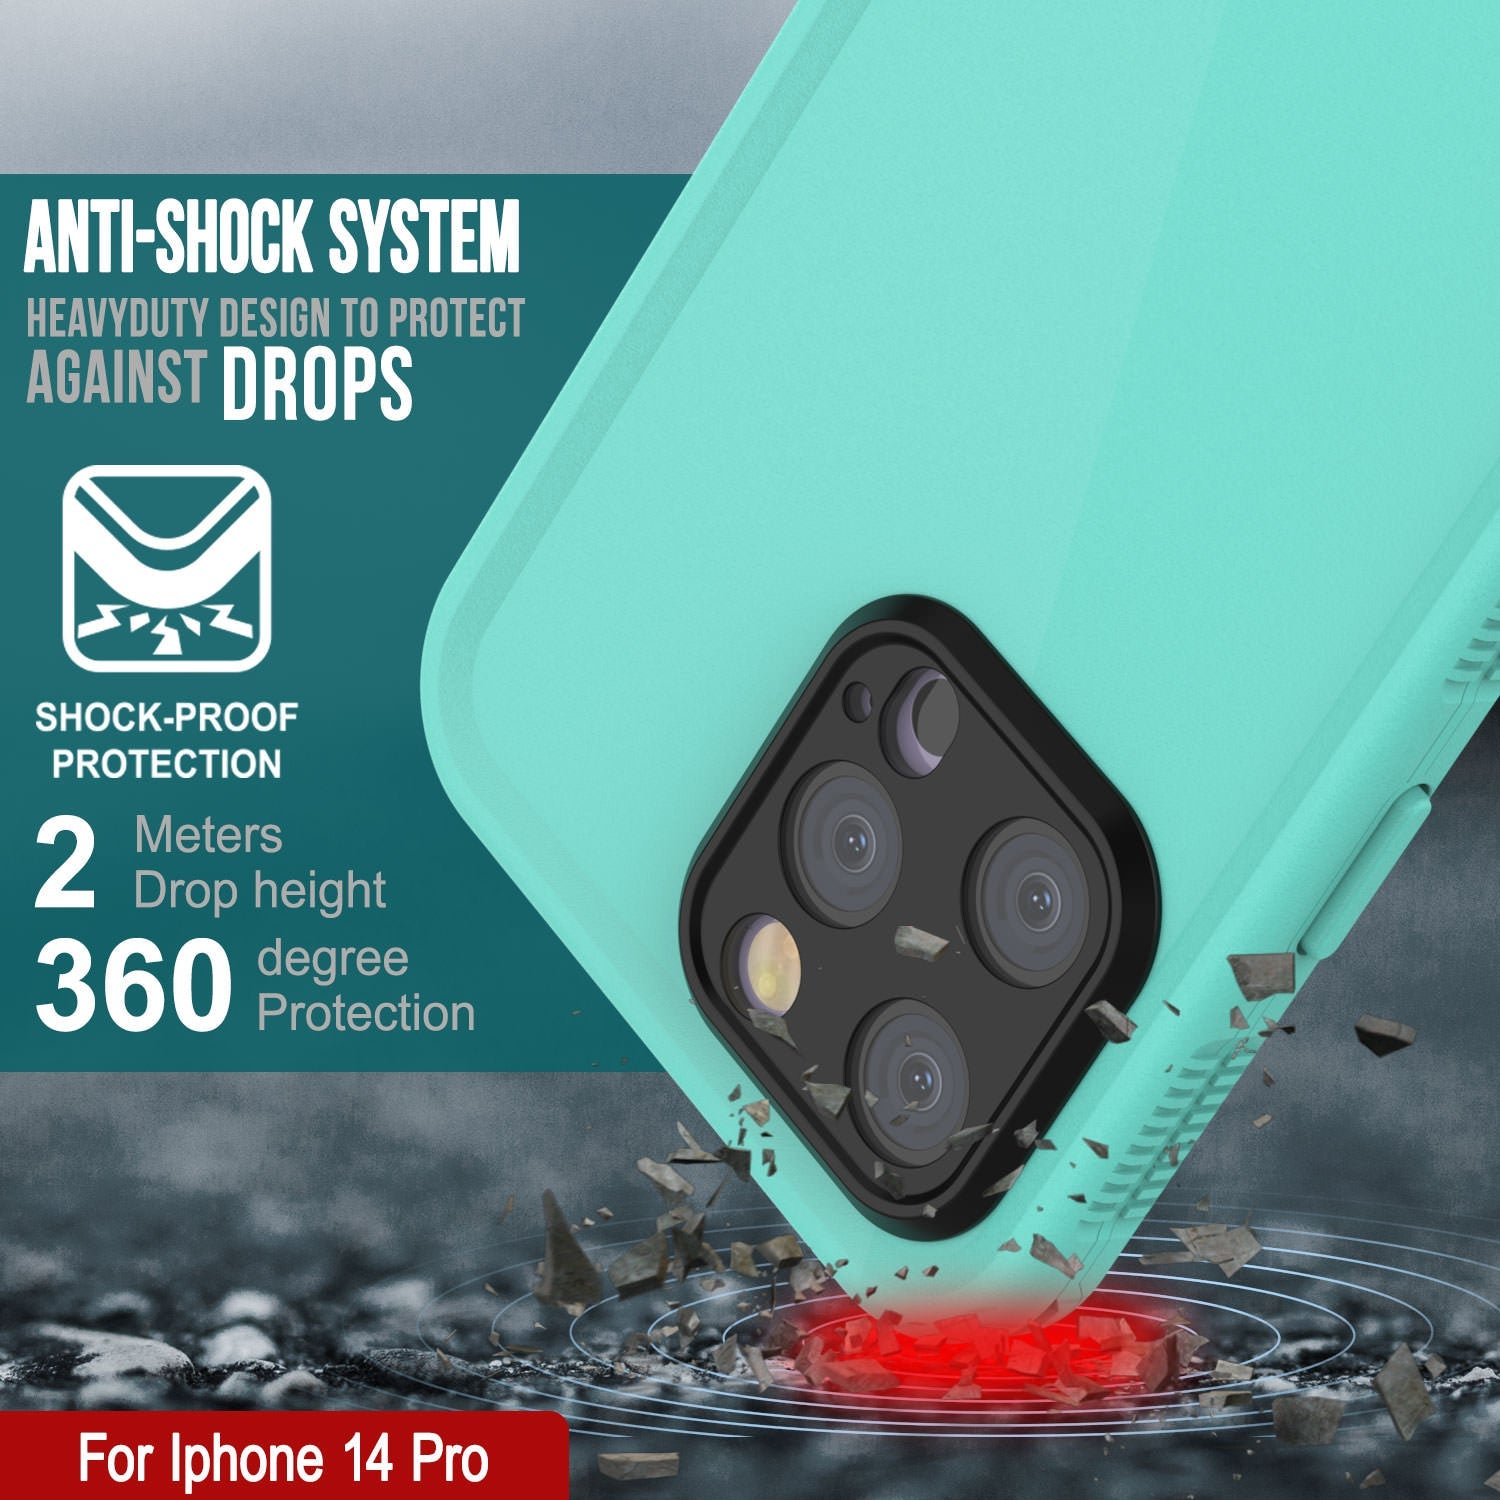 Punkcase iPhone 14 Pro Waterproof Case [Aqua Series] Armor Cover [Blue]